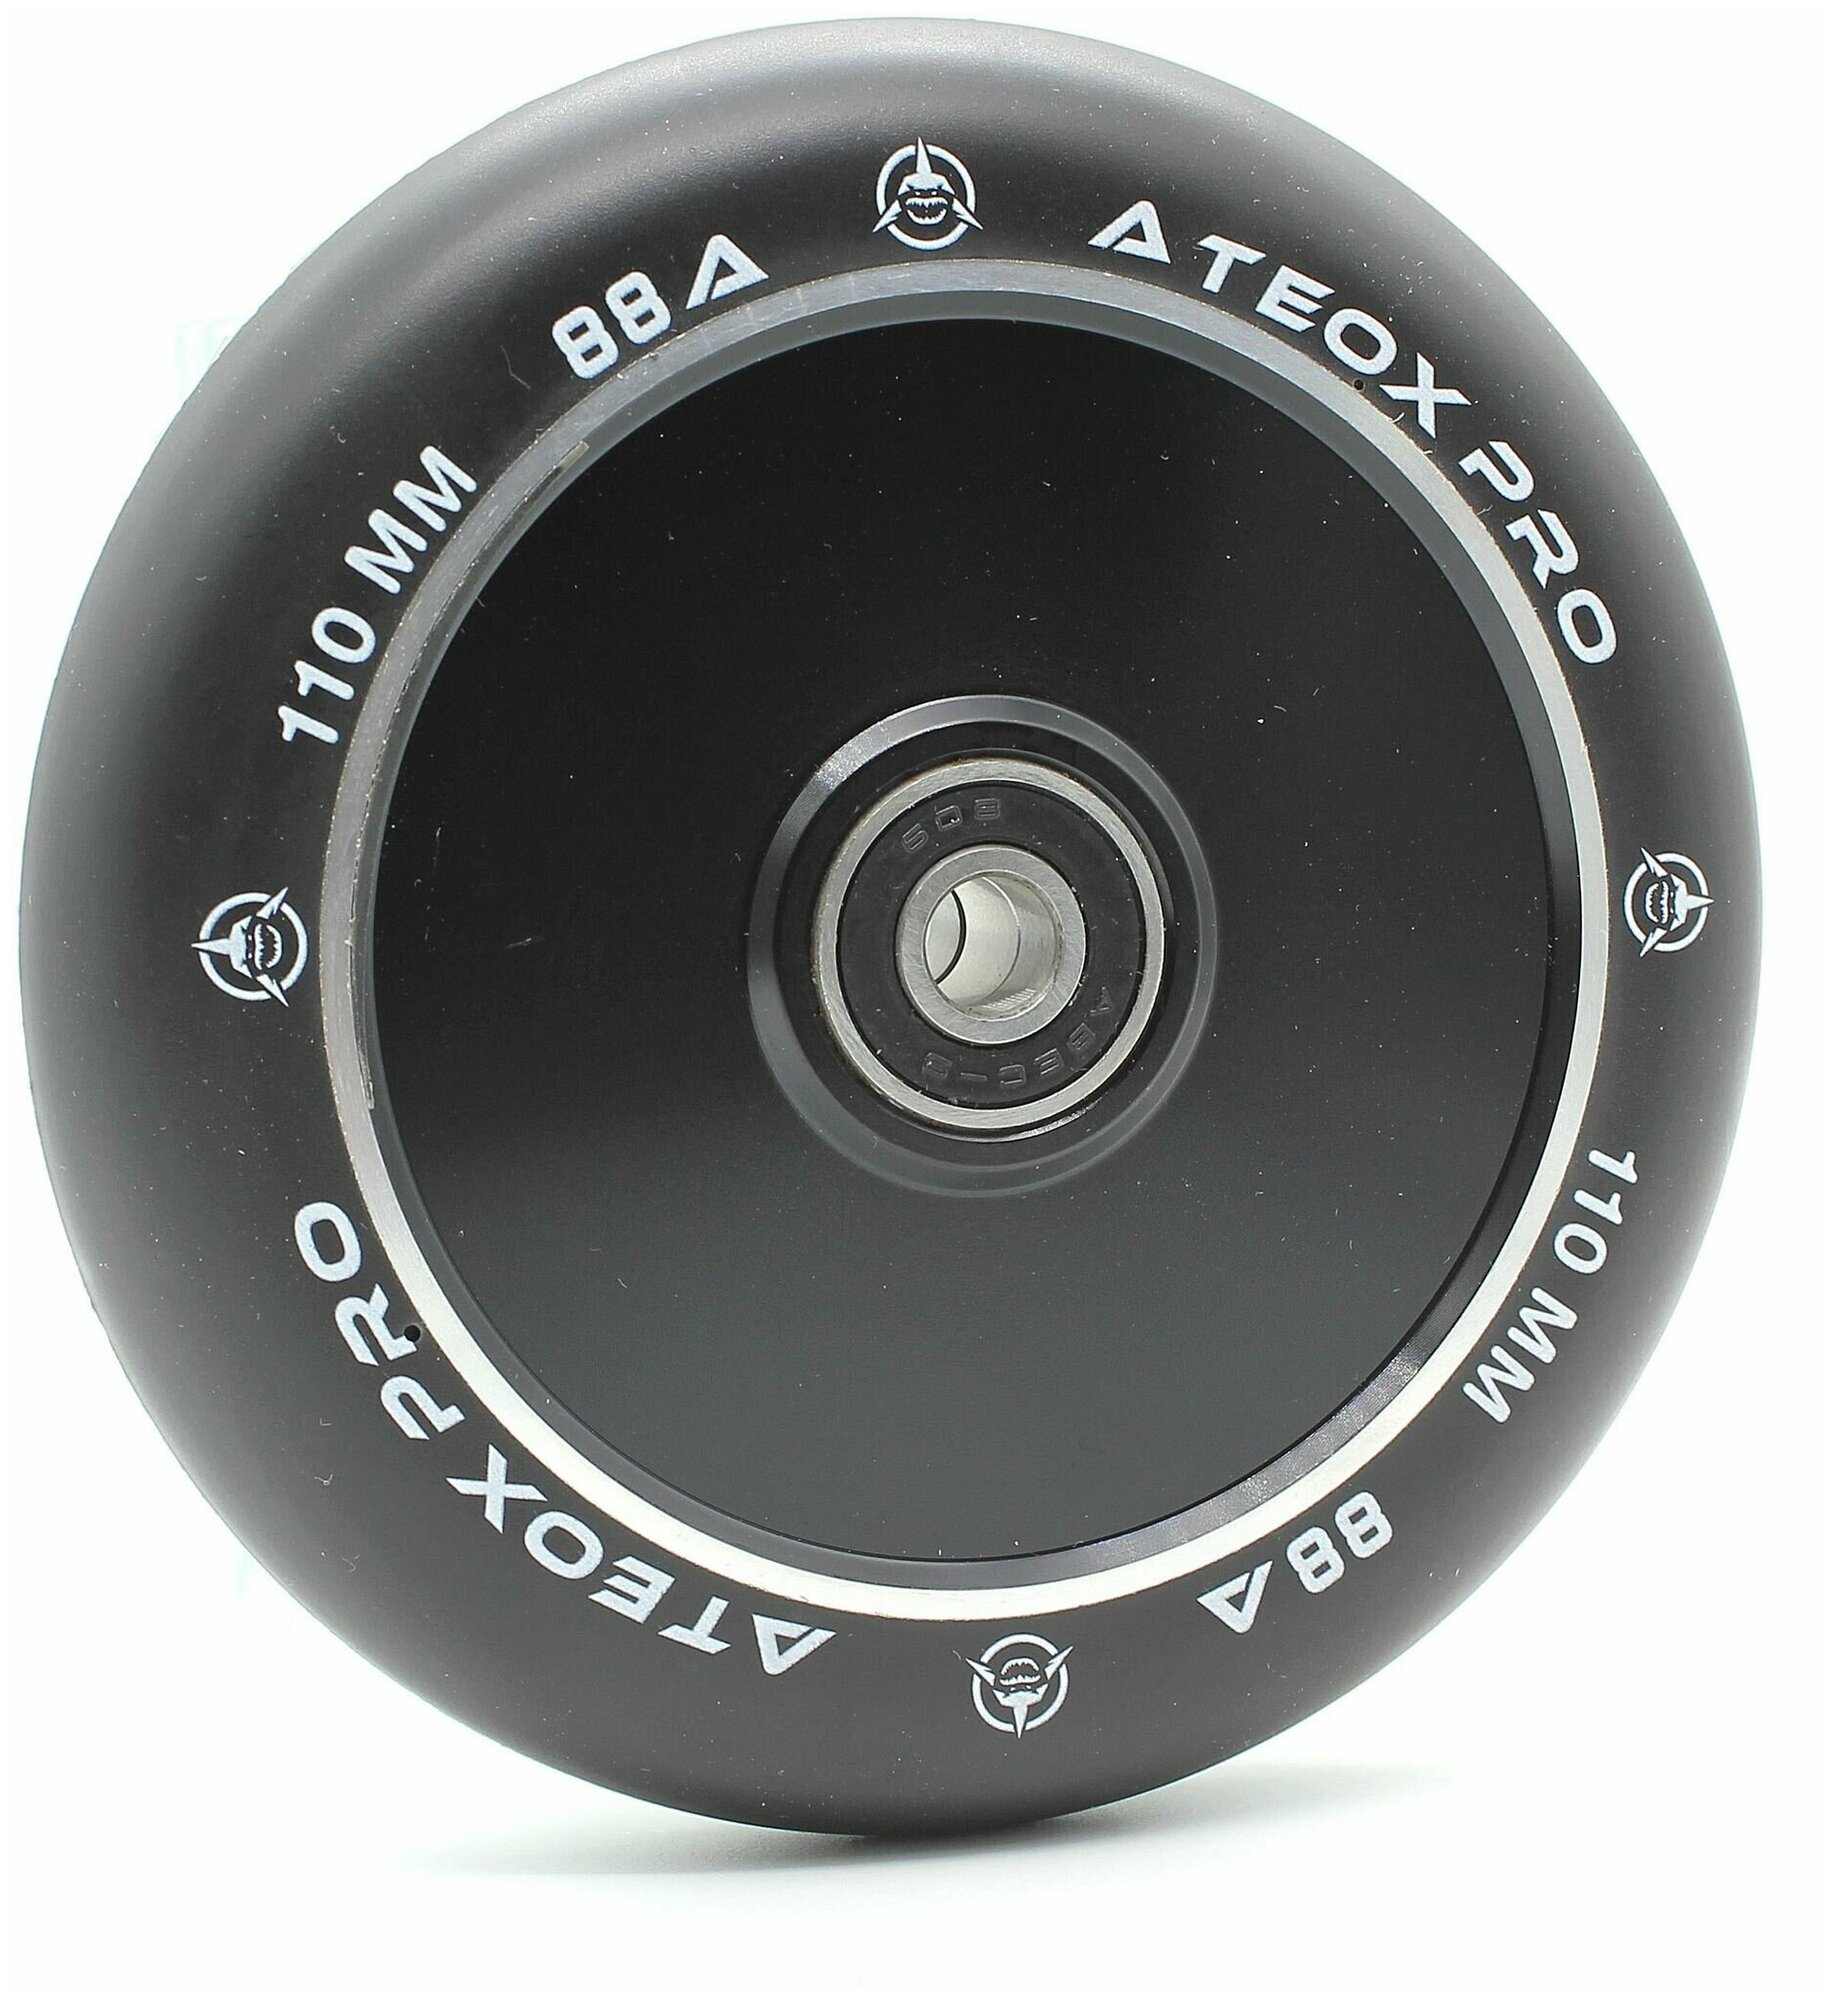 Колесо Ateox Pro Full Core 110 AL Black для трюкового самоката